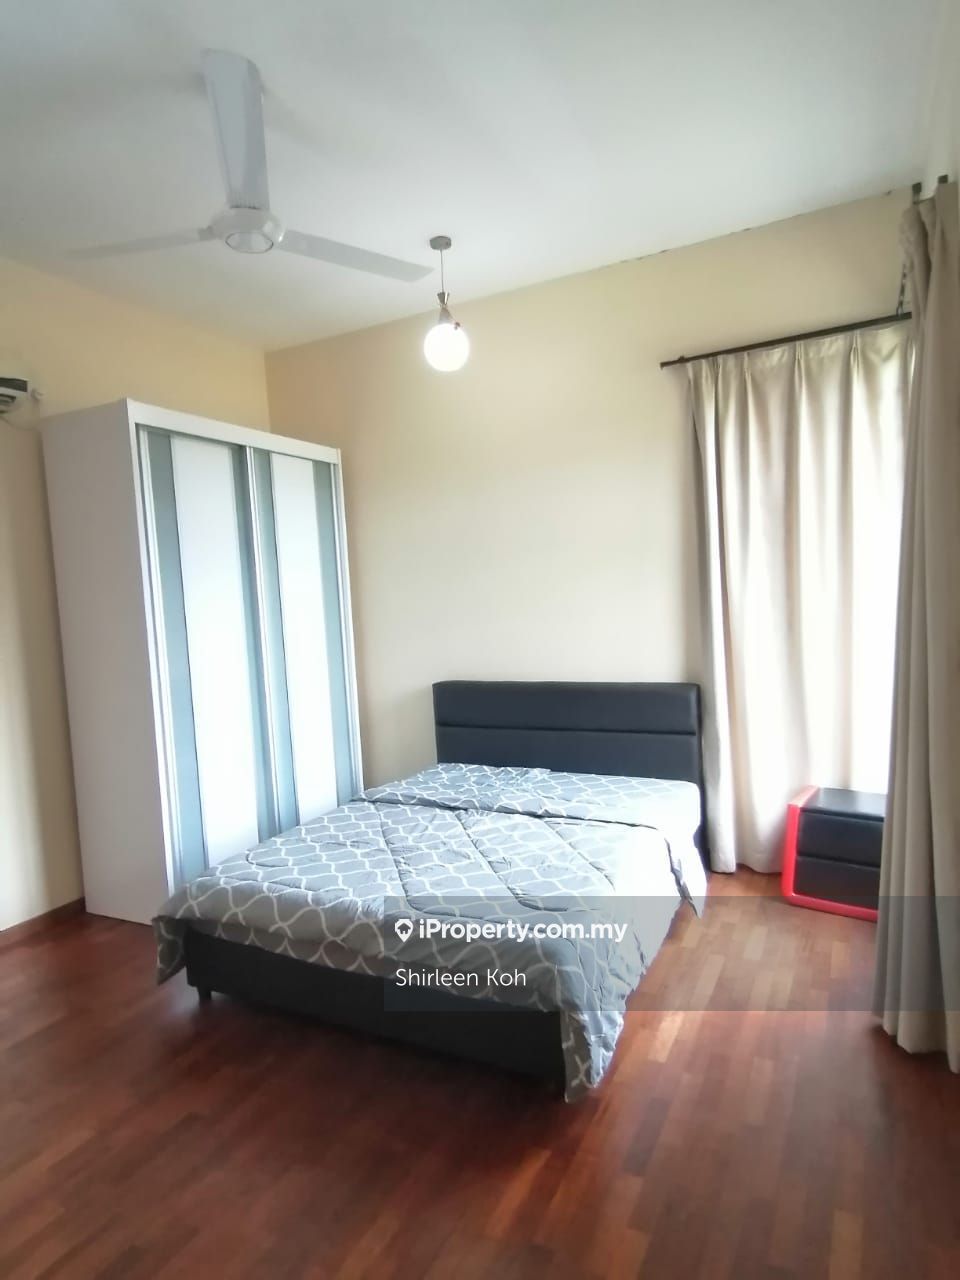 Room for rent at Horizon Hill @ Iskandar Puteri